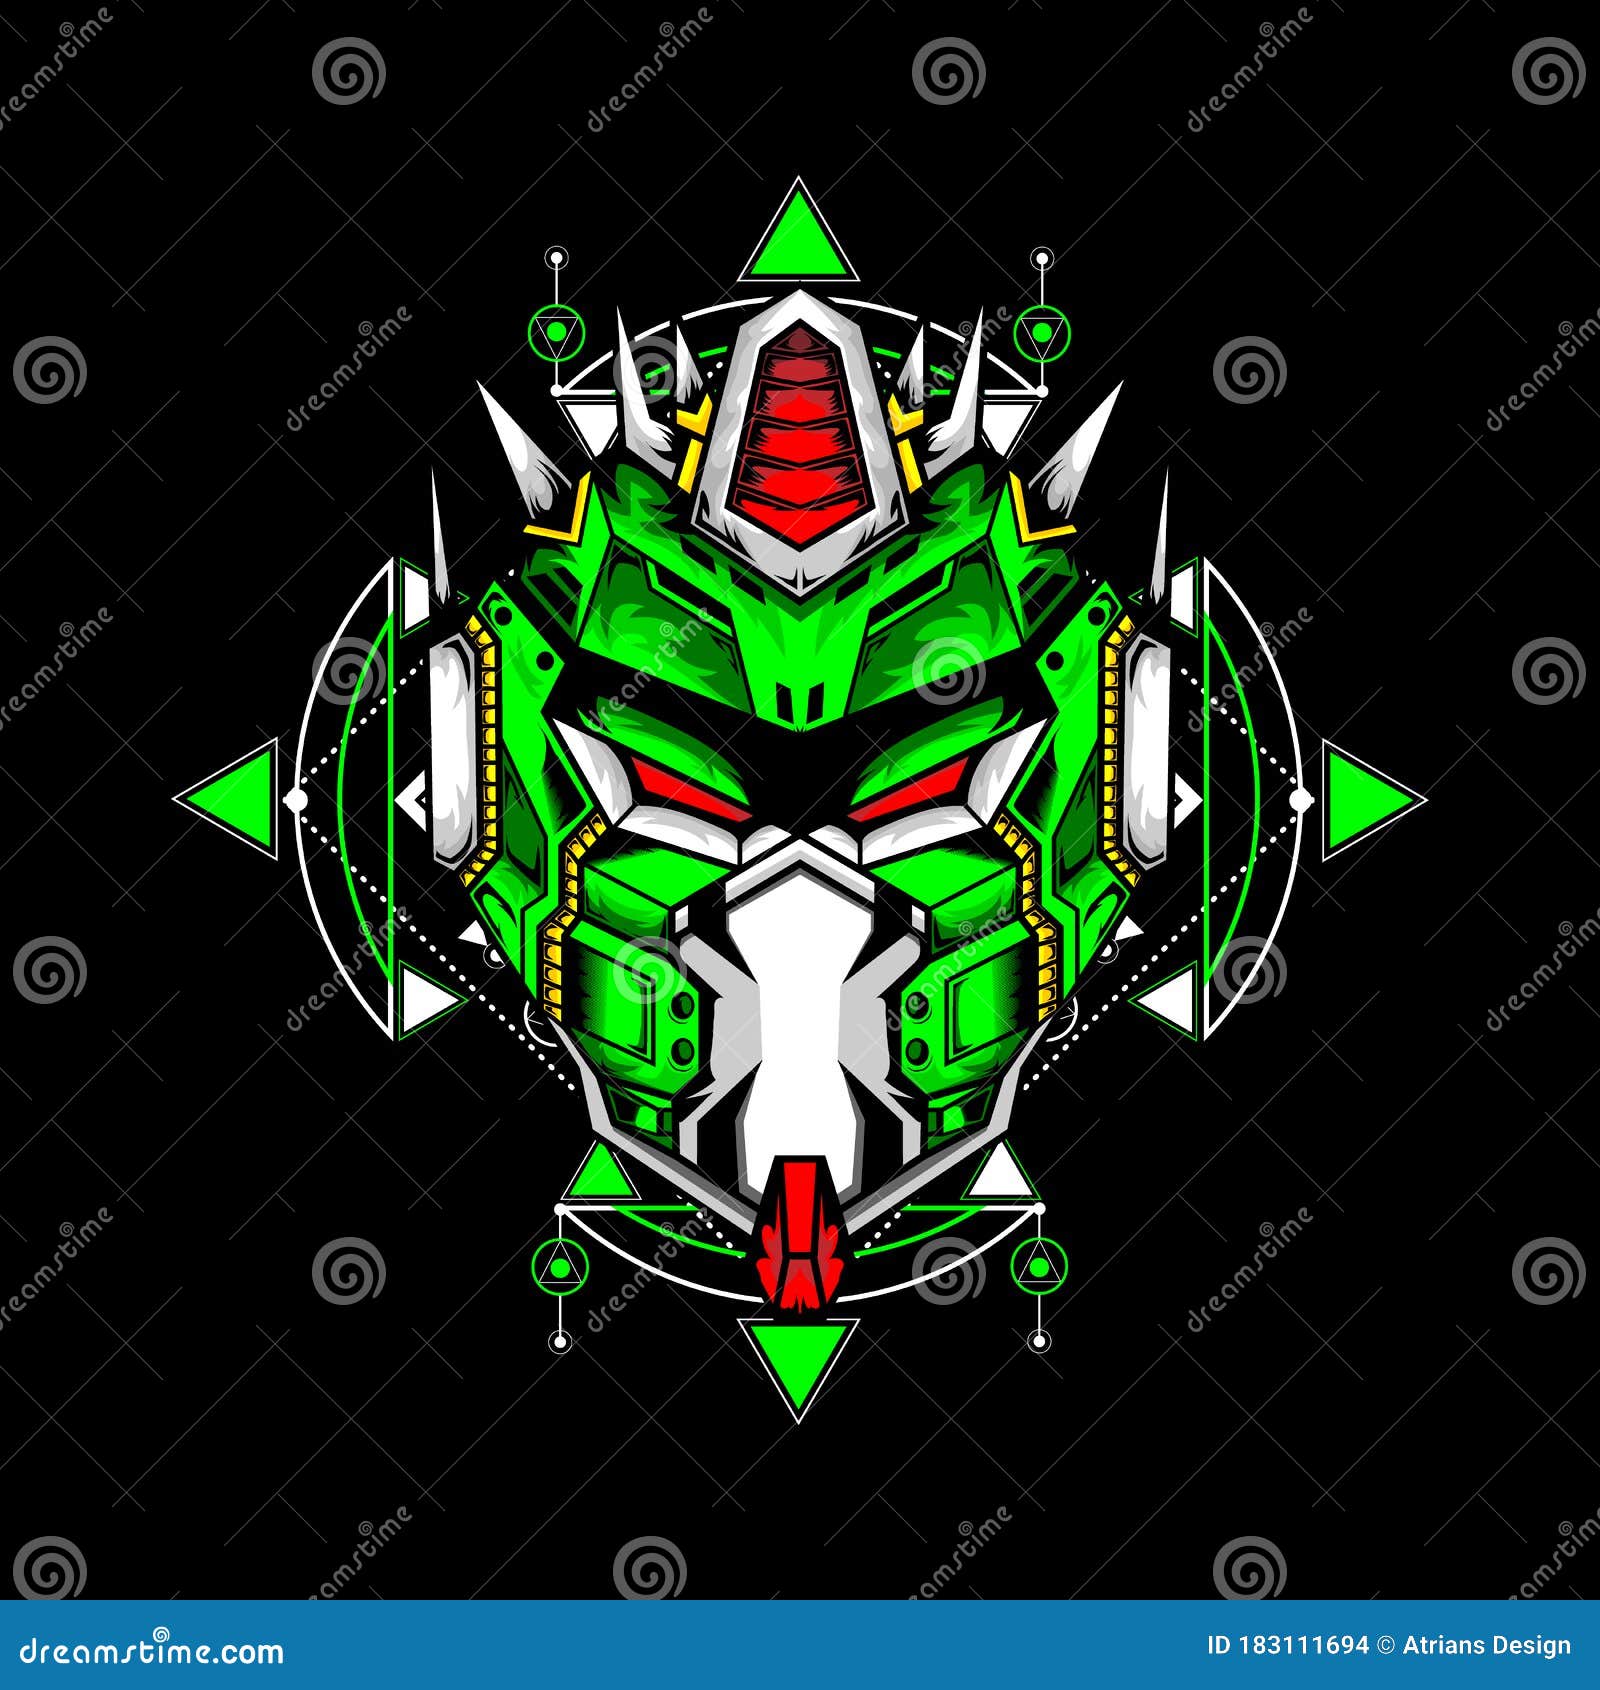 Share more than 153 green gaming logo super hot